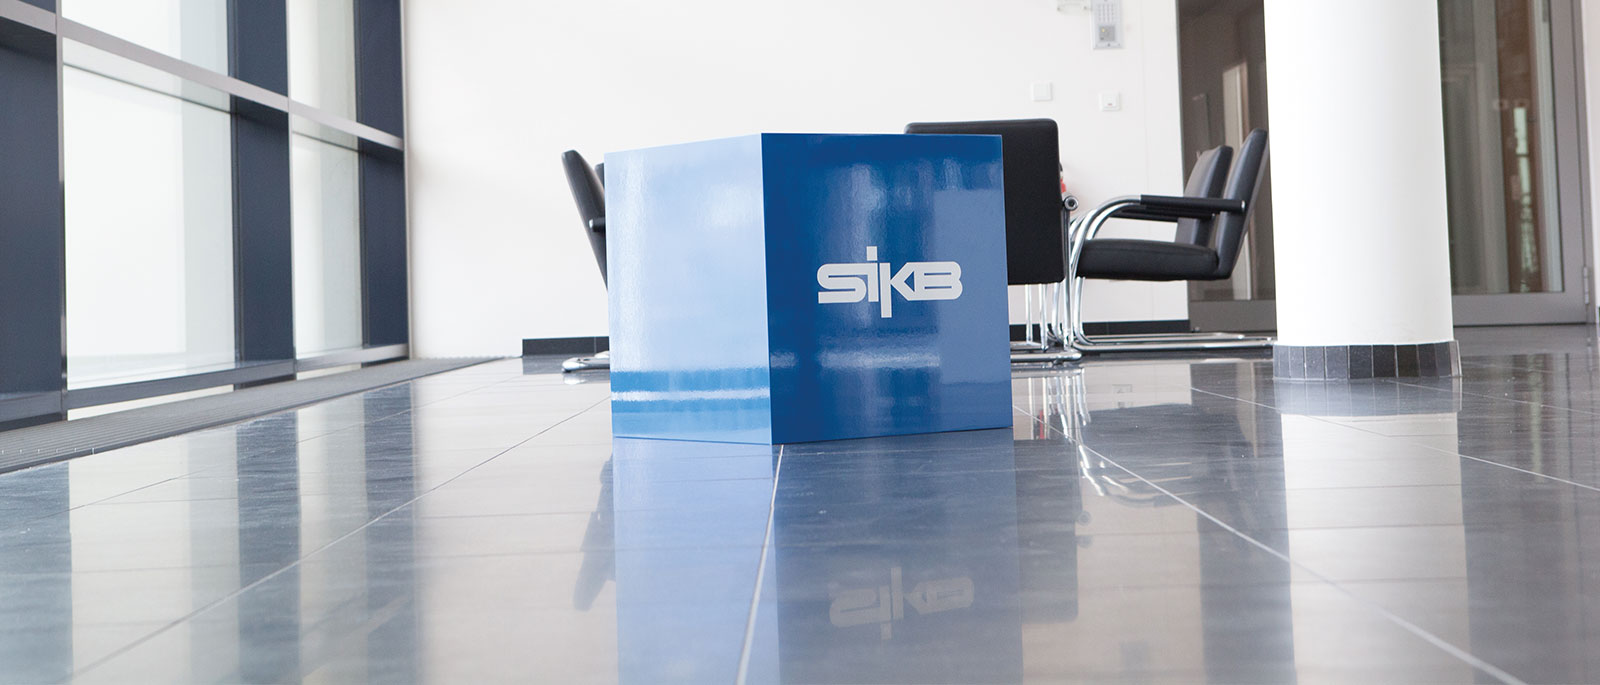 Würfel mit SIKB Logo im Gebäudeflur